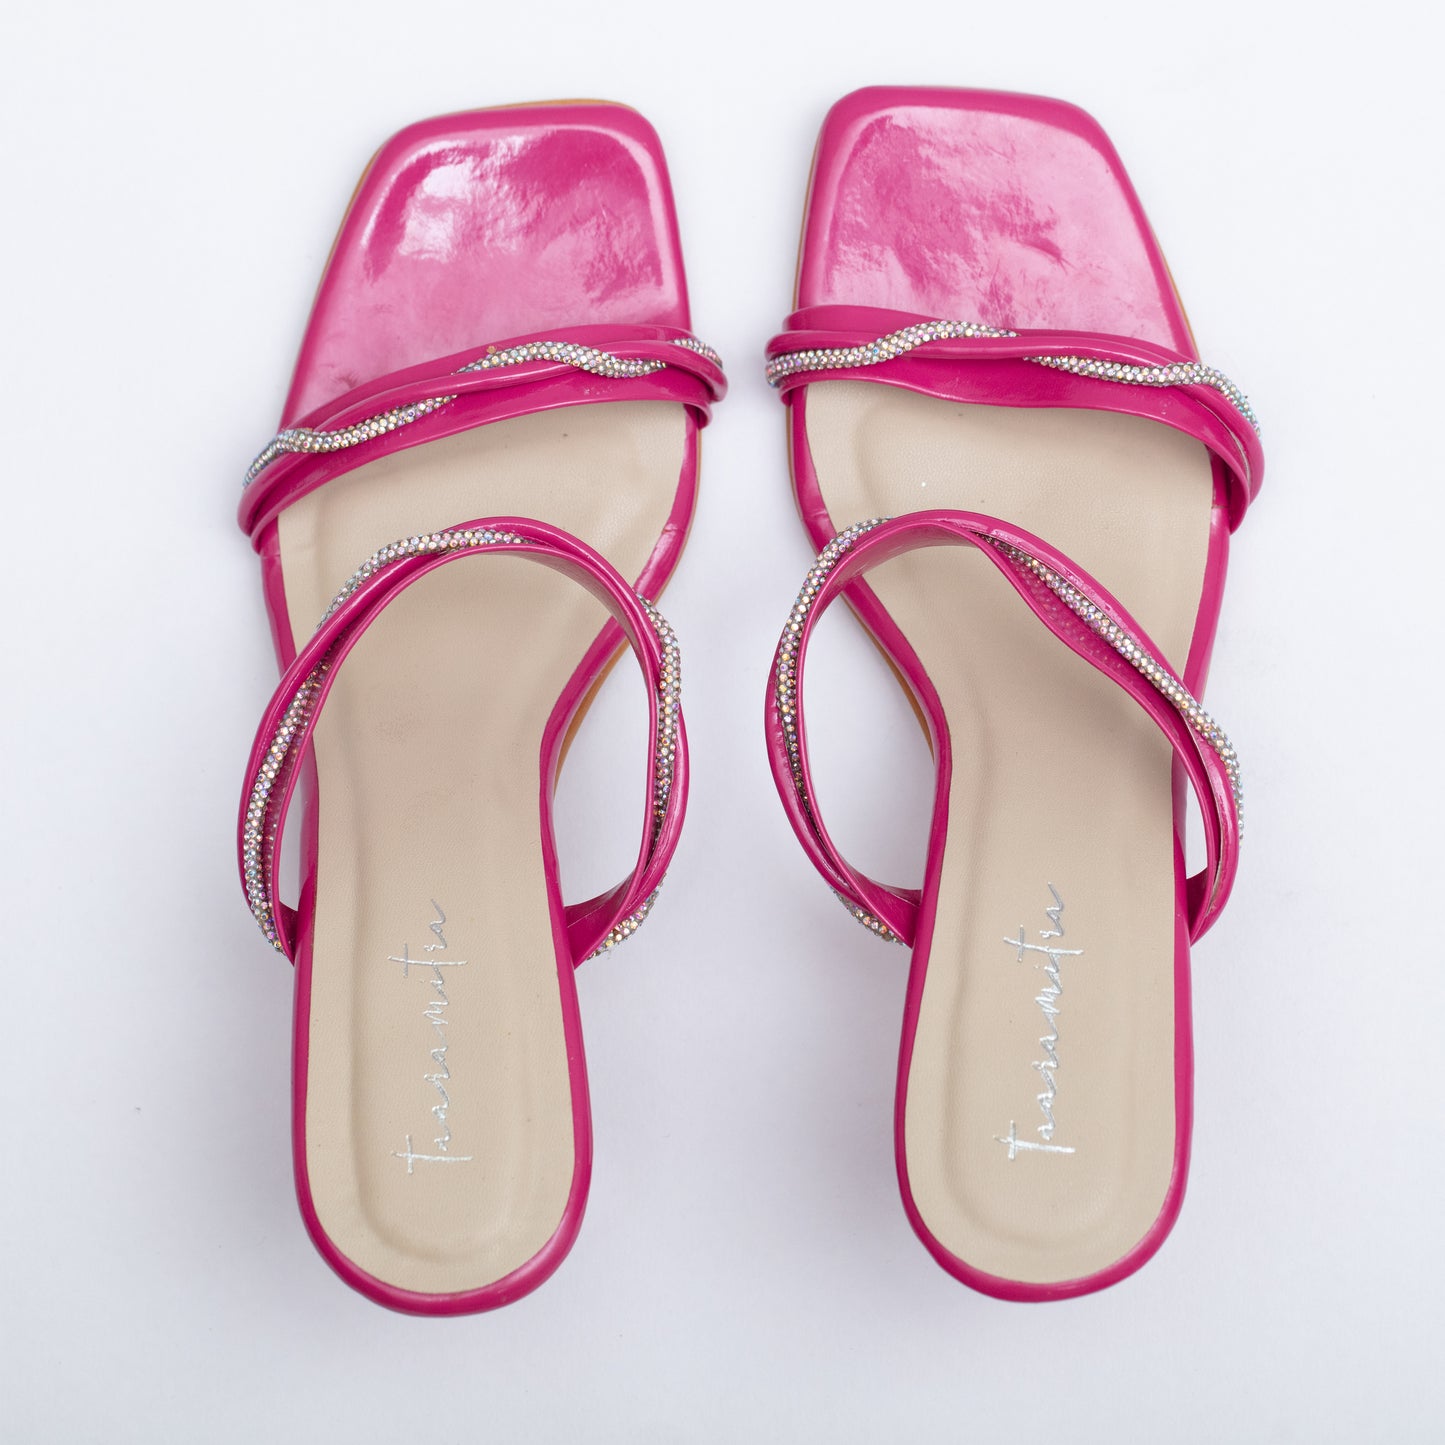 Electric pink heels